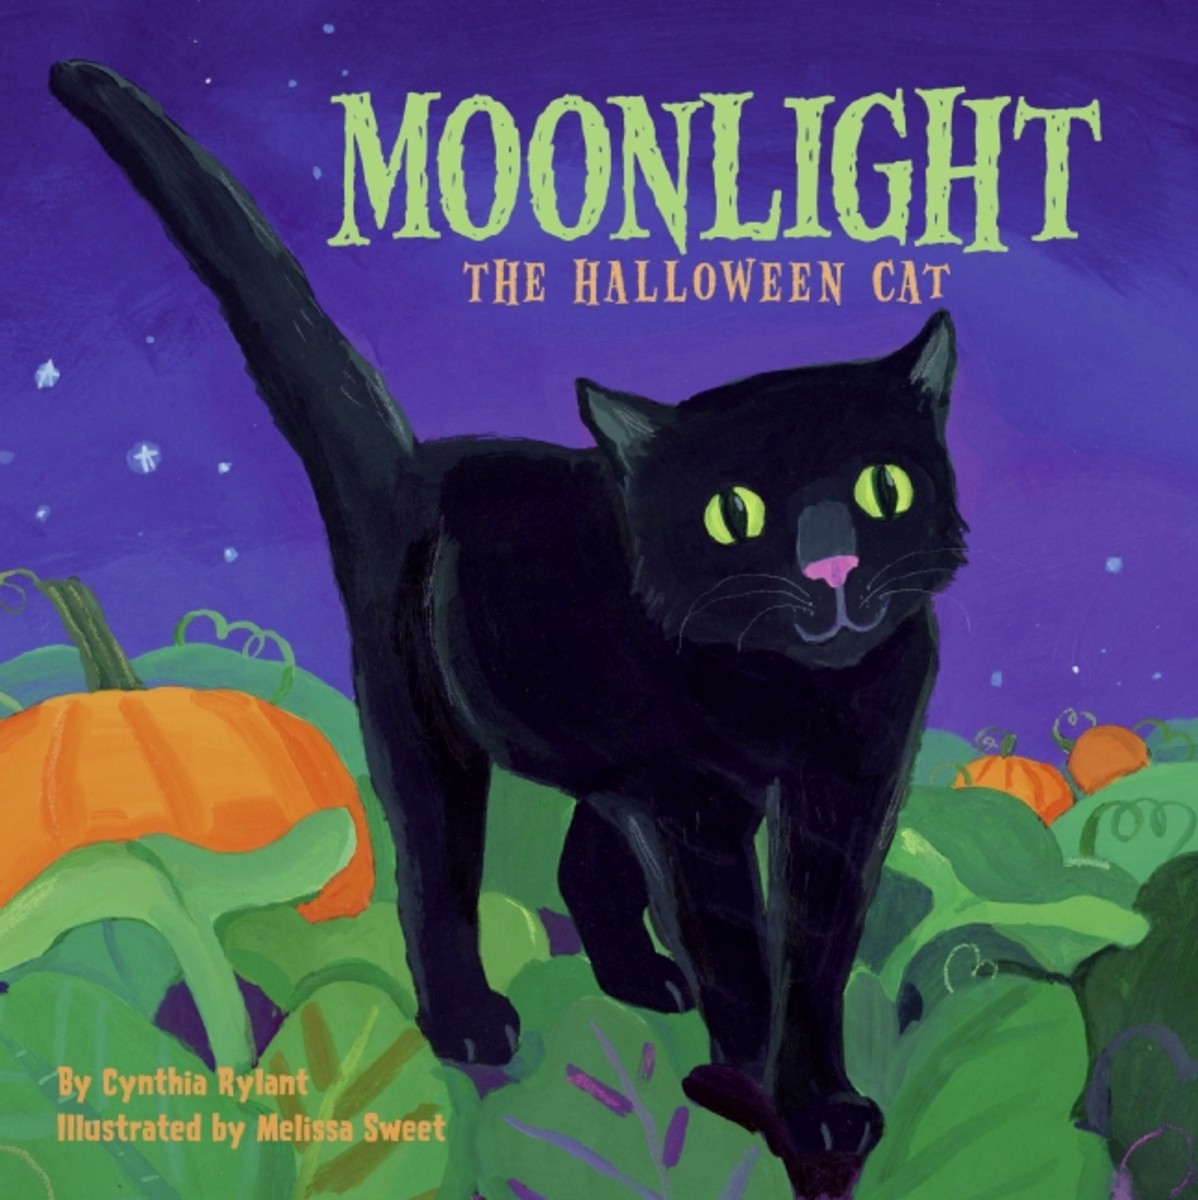 Moonlight the Halloween Cat by Cynthia Rylant